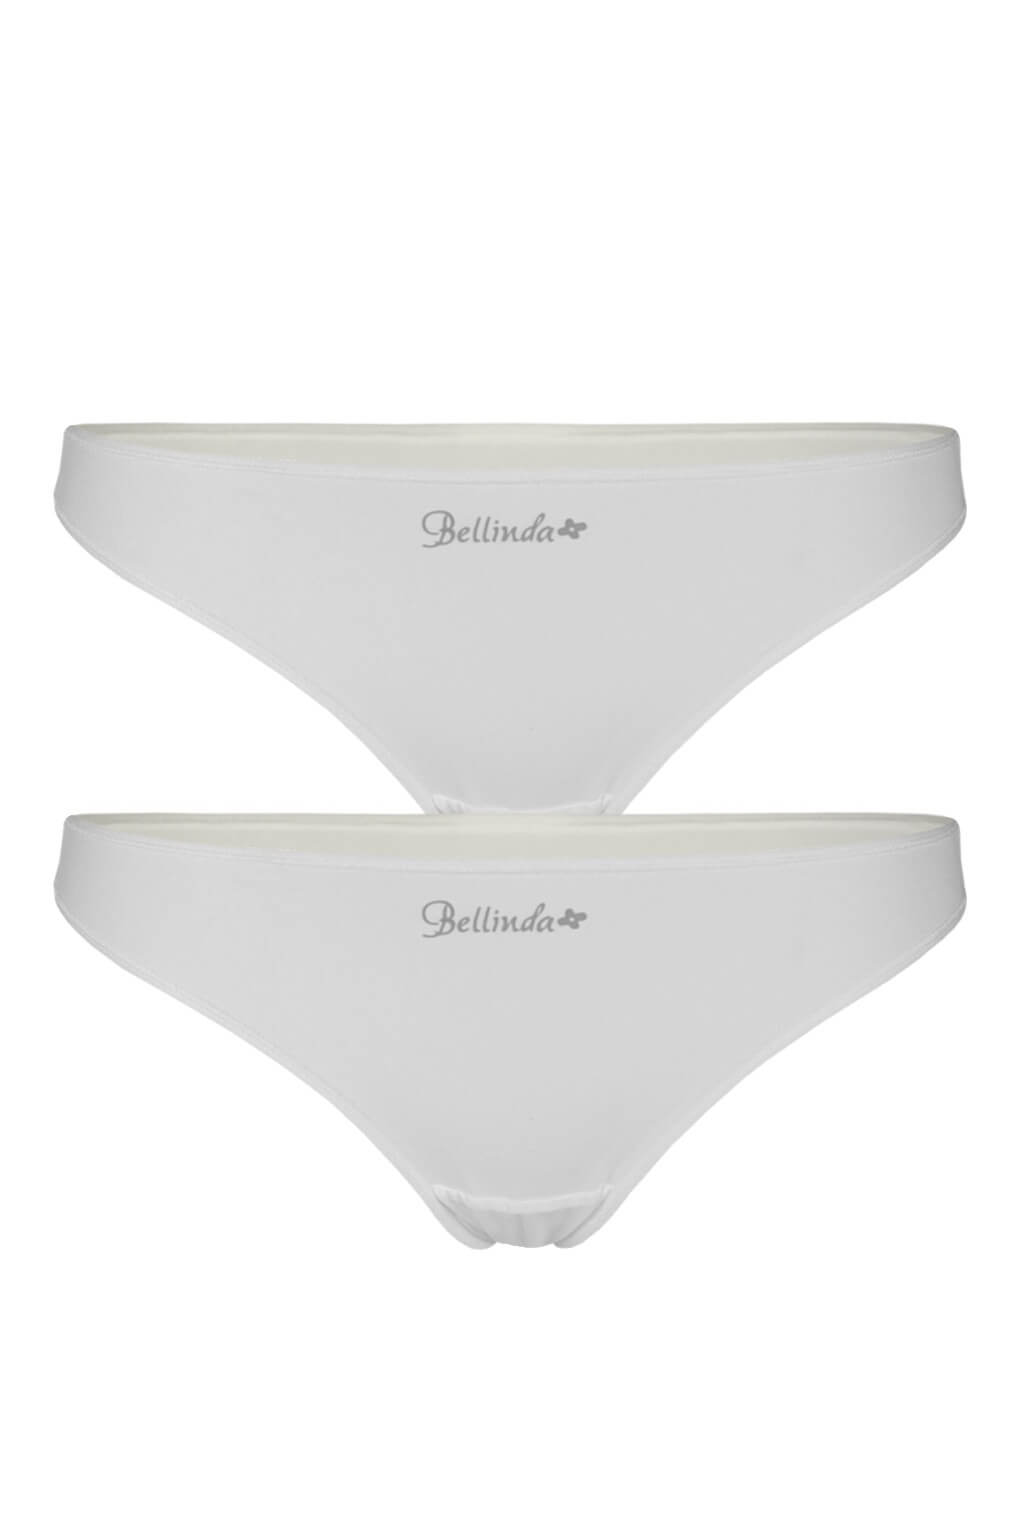 Bellinda kalhotky Microfibre Minislip 2ks S bílá